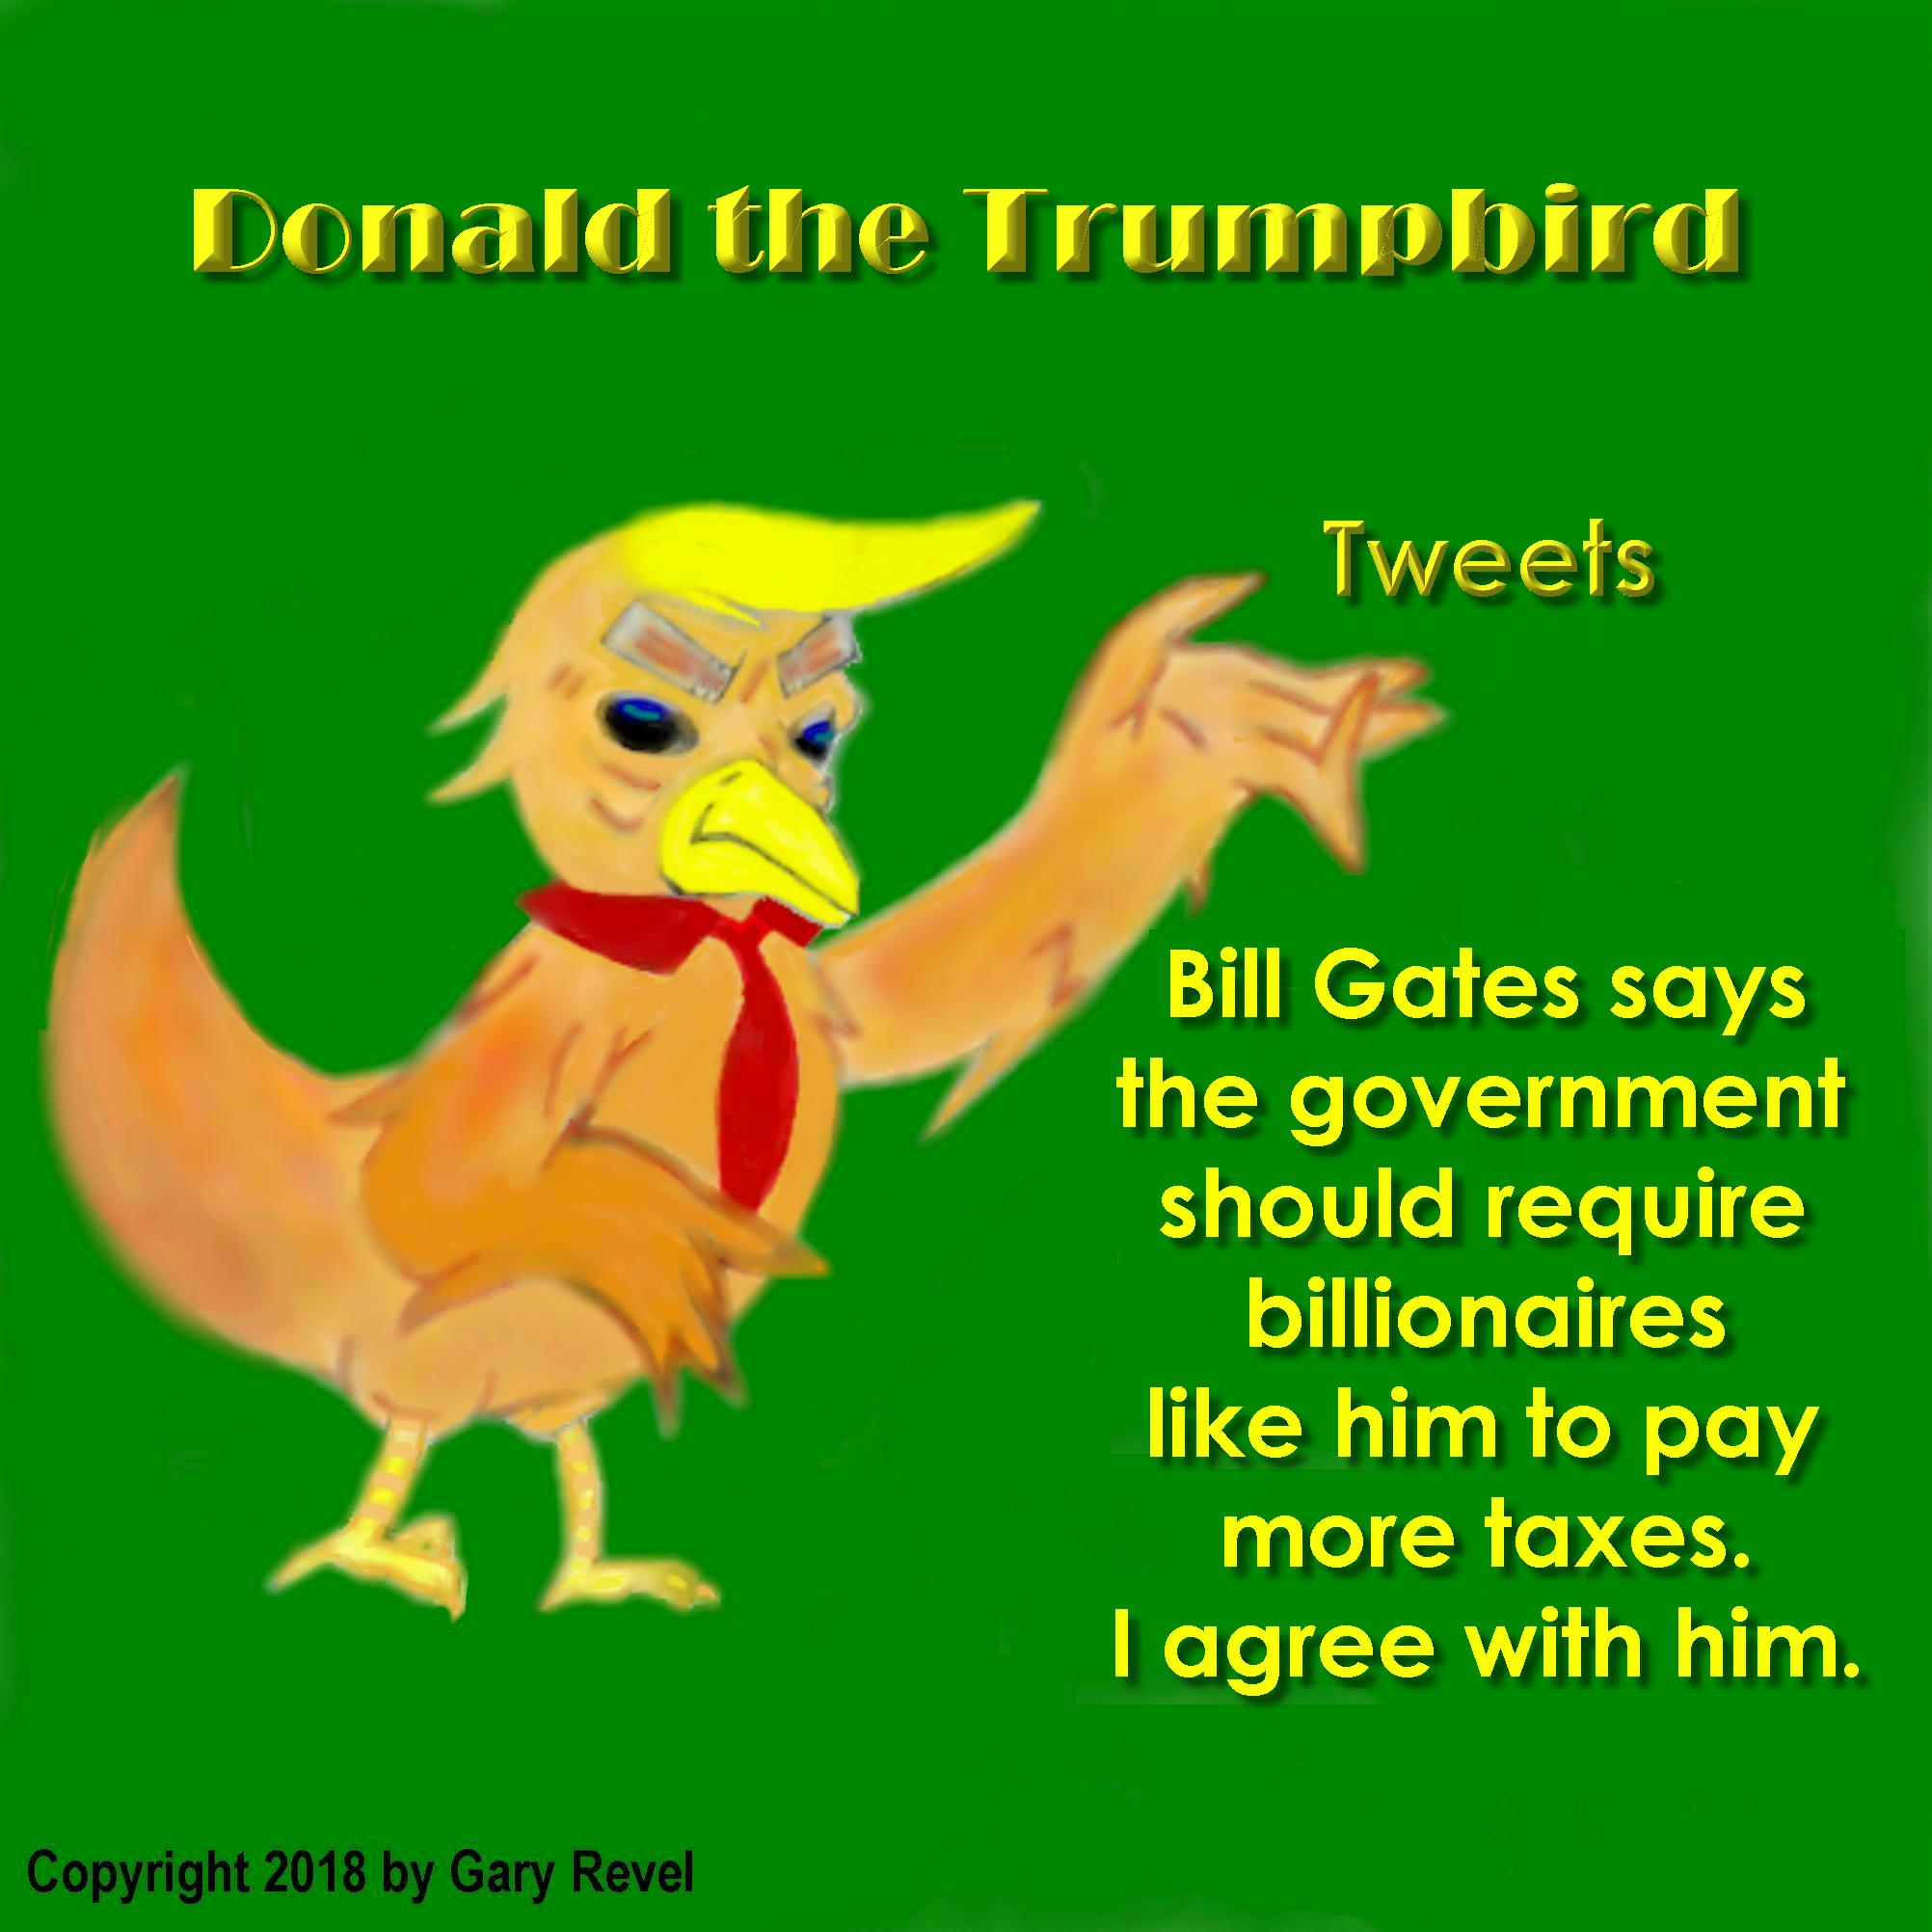 Donald the Trumpbird says Bill Gates